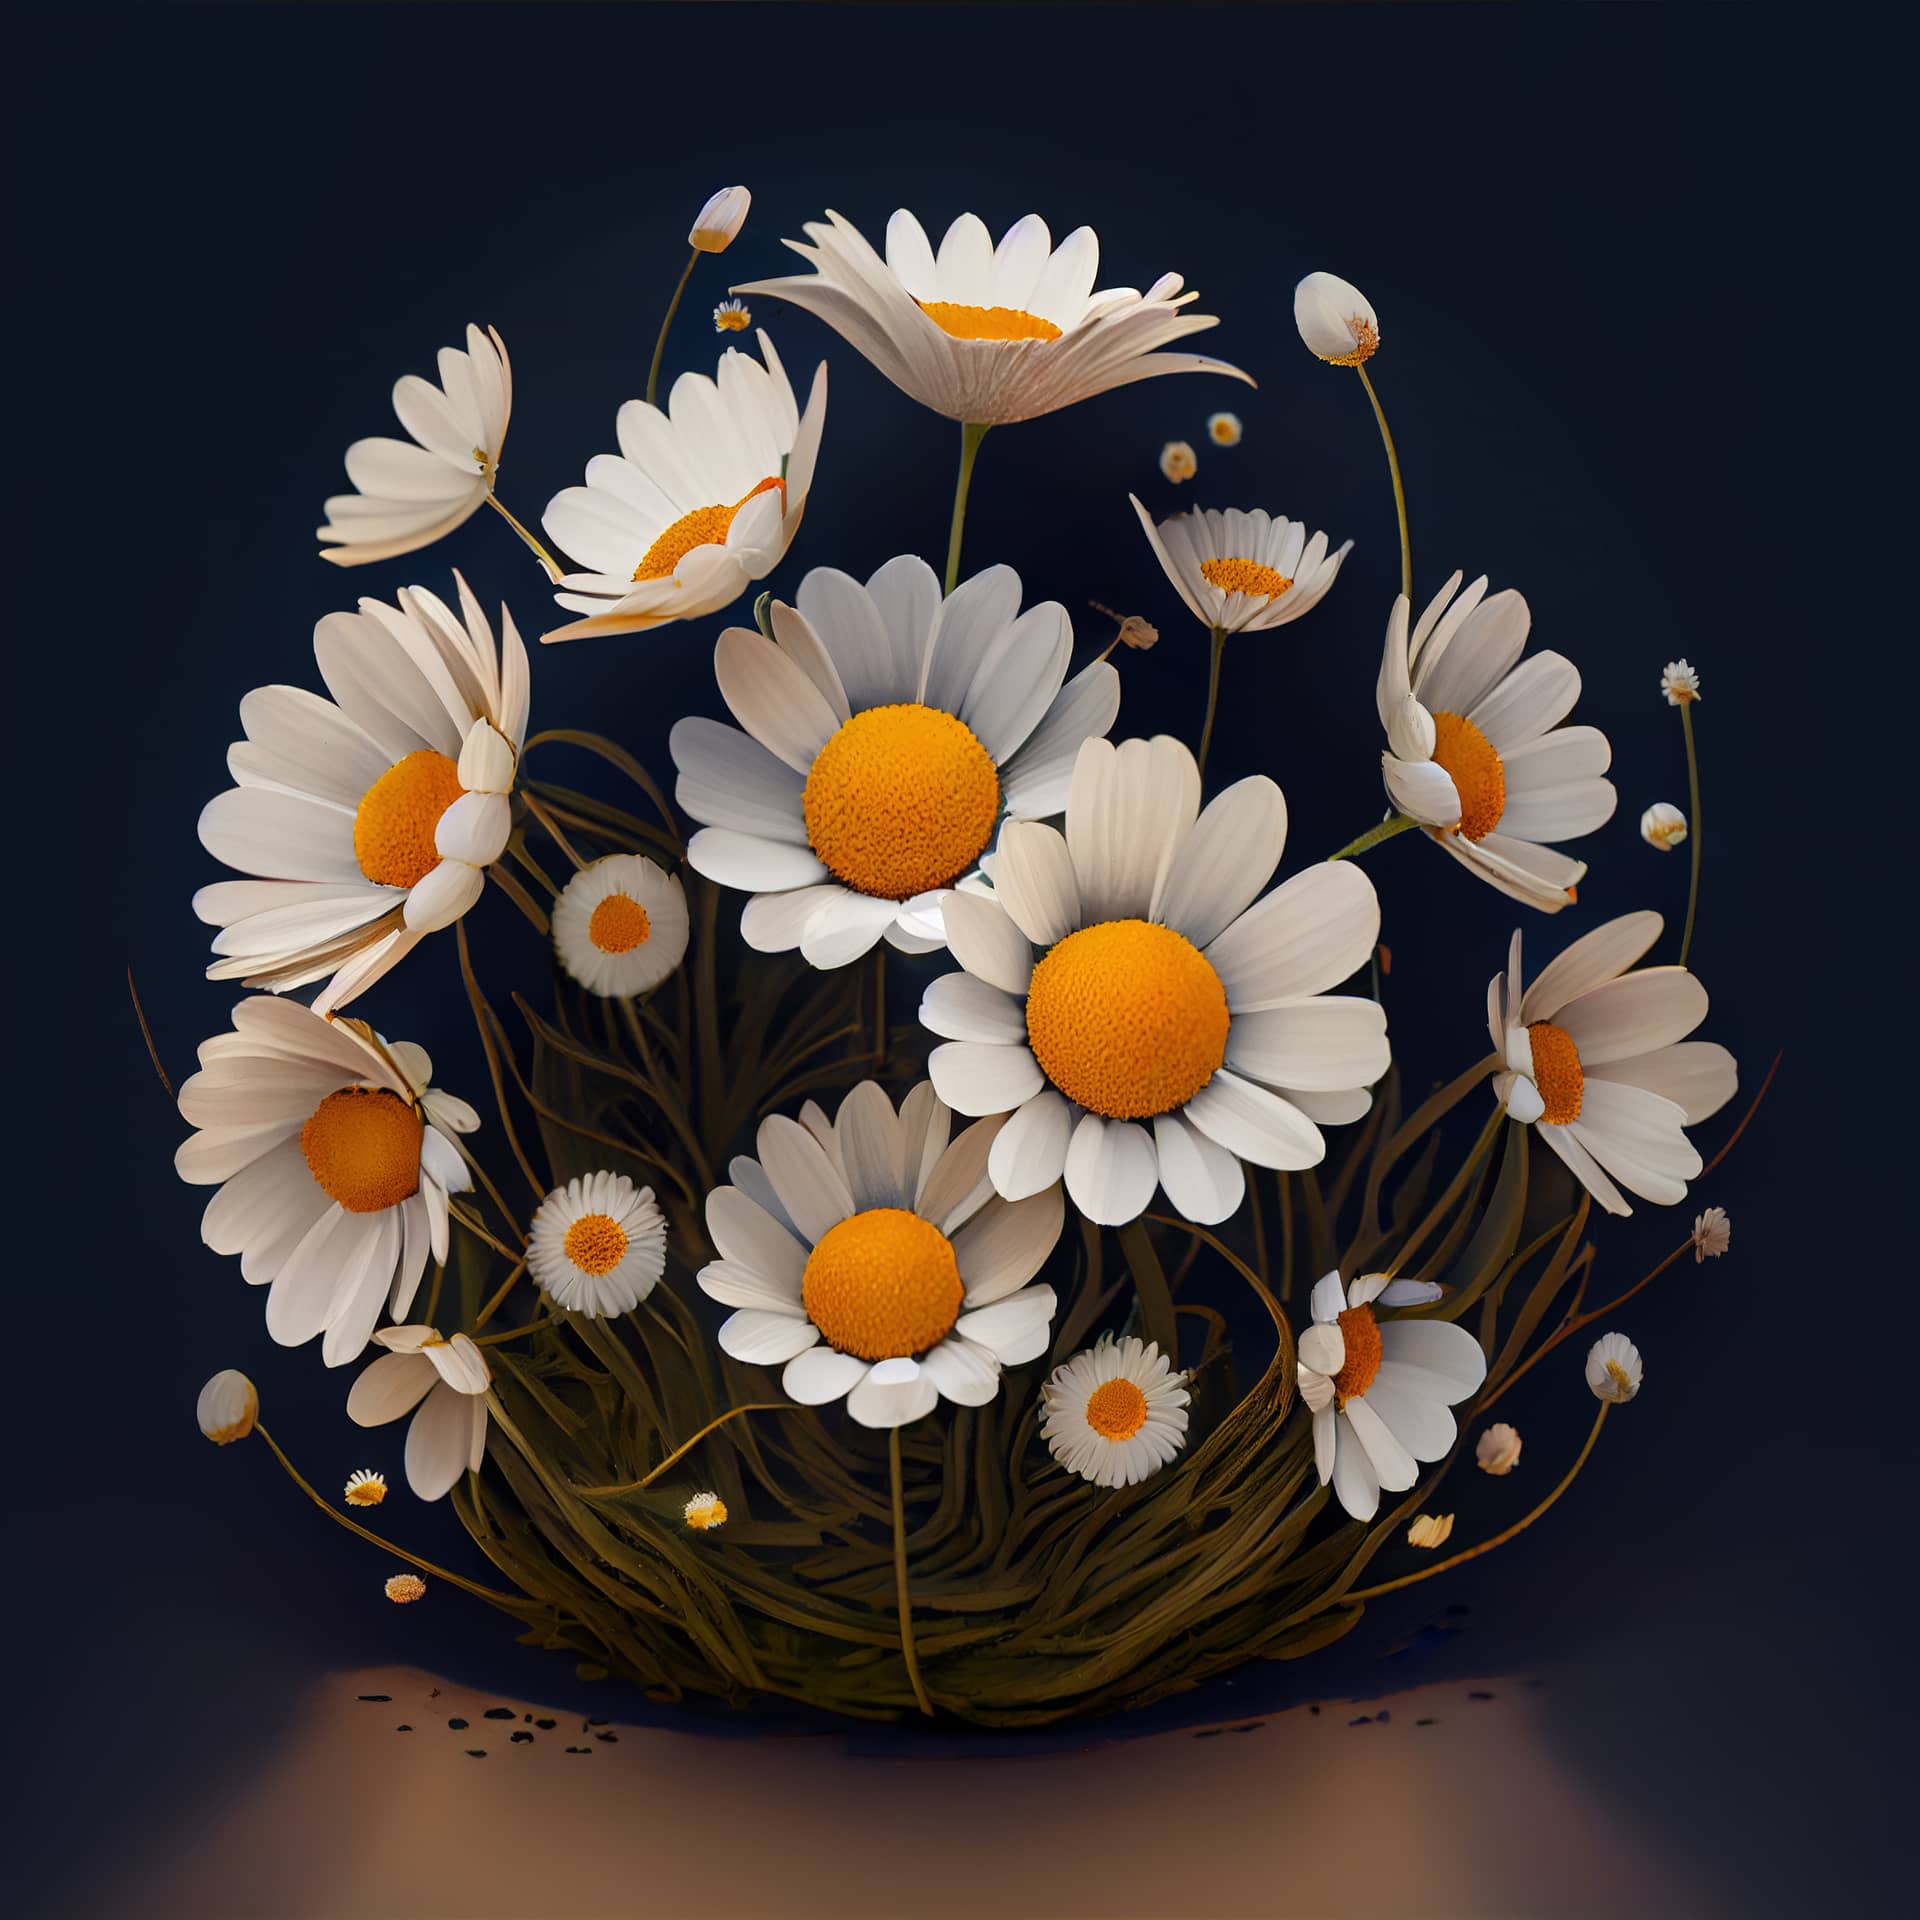 Bouquet daisies dark background springtime concept generative picture